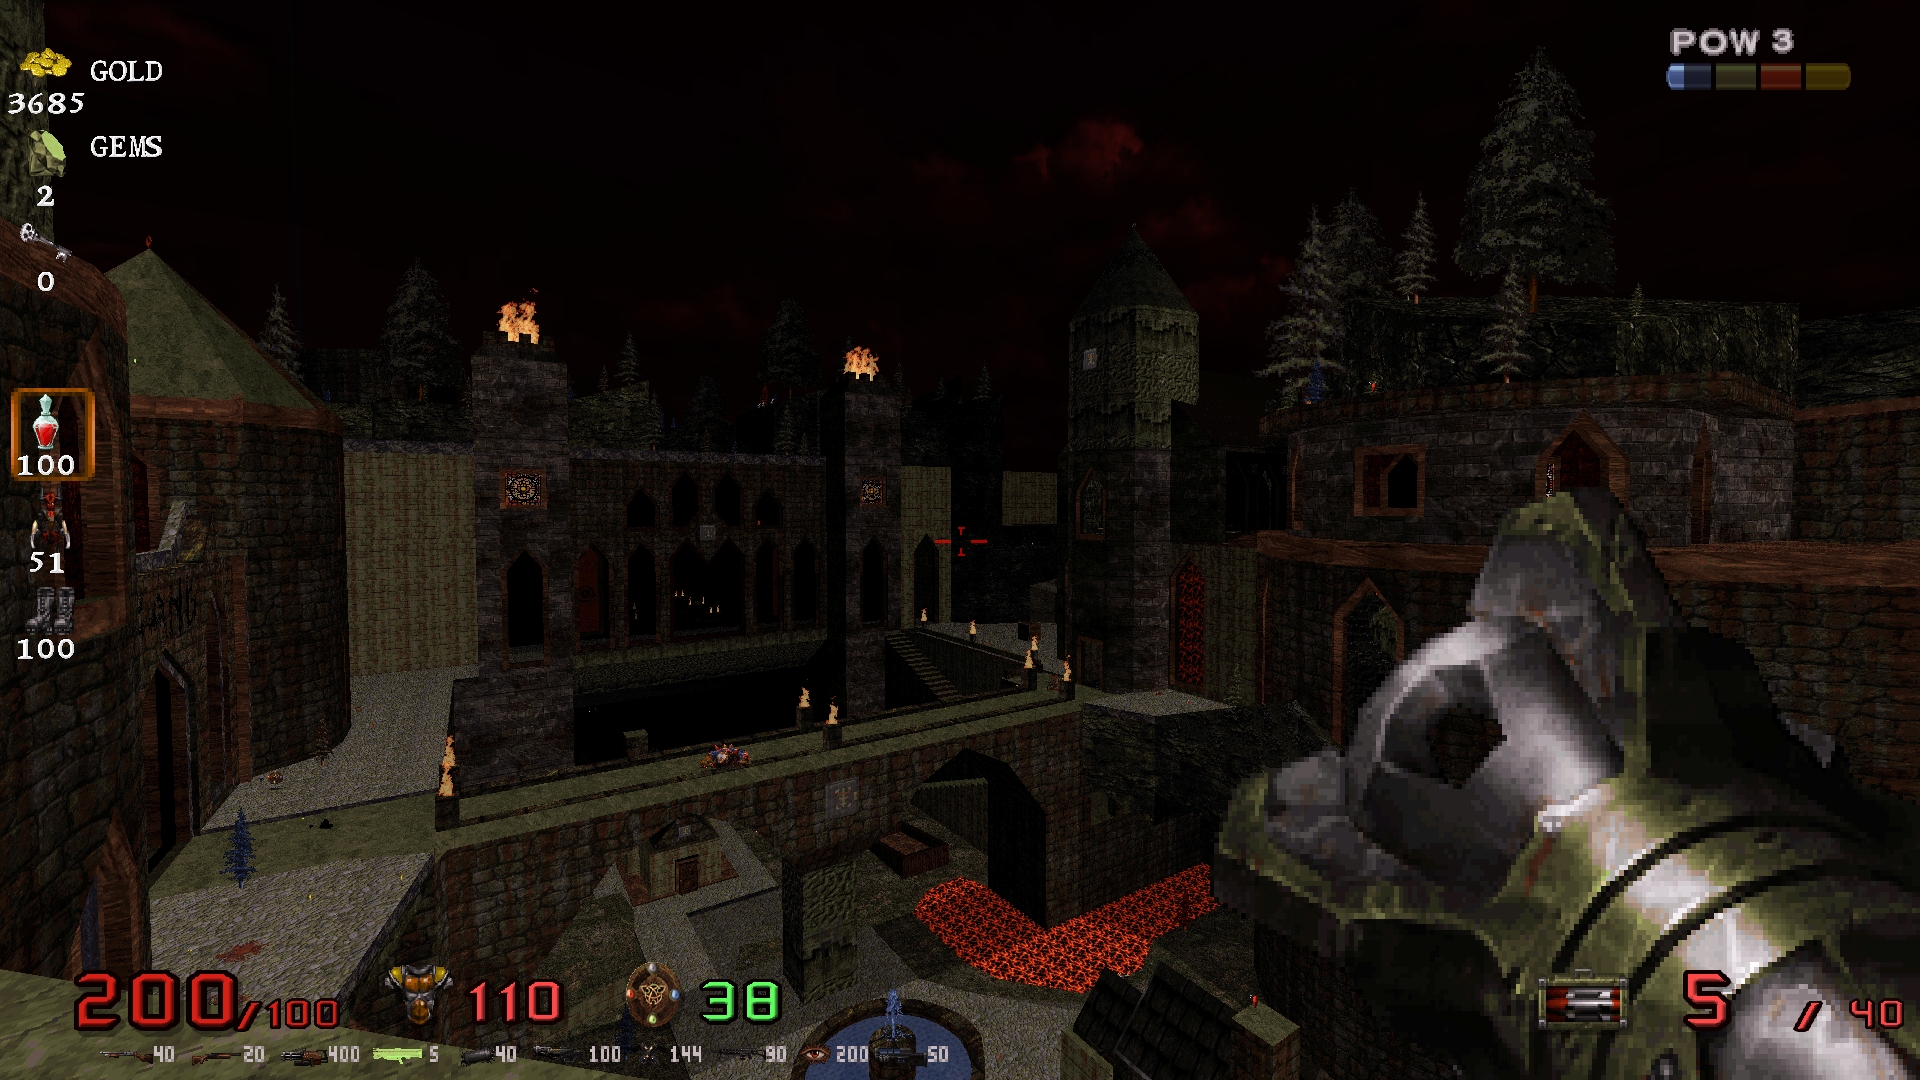 Demon Throne Duke Nukem 3D overhaul